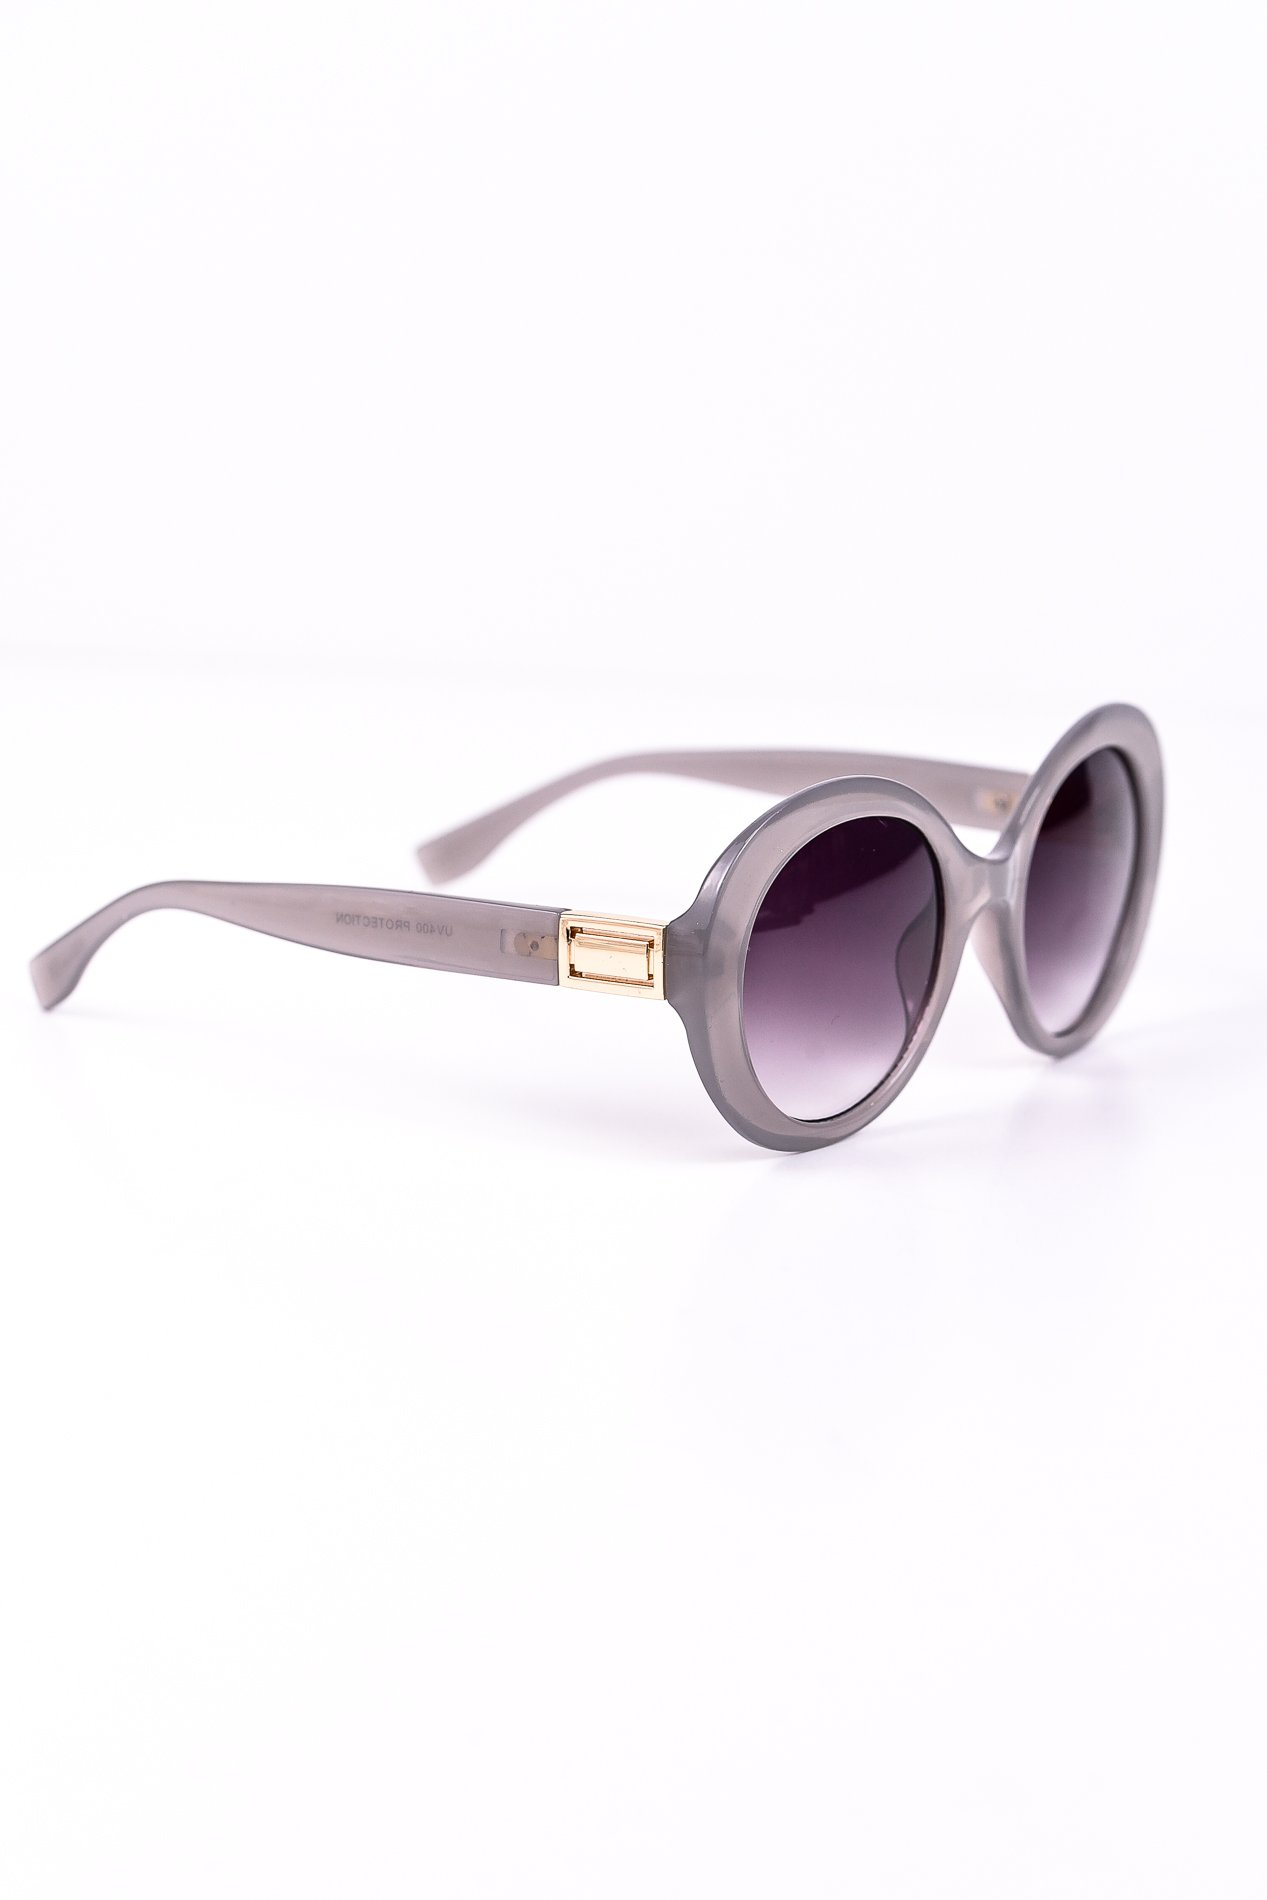 Gray Round Frame Sunglasses - SGL189GR - FREE hard case